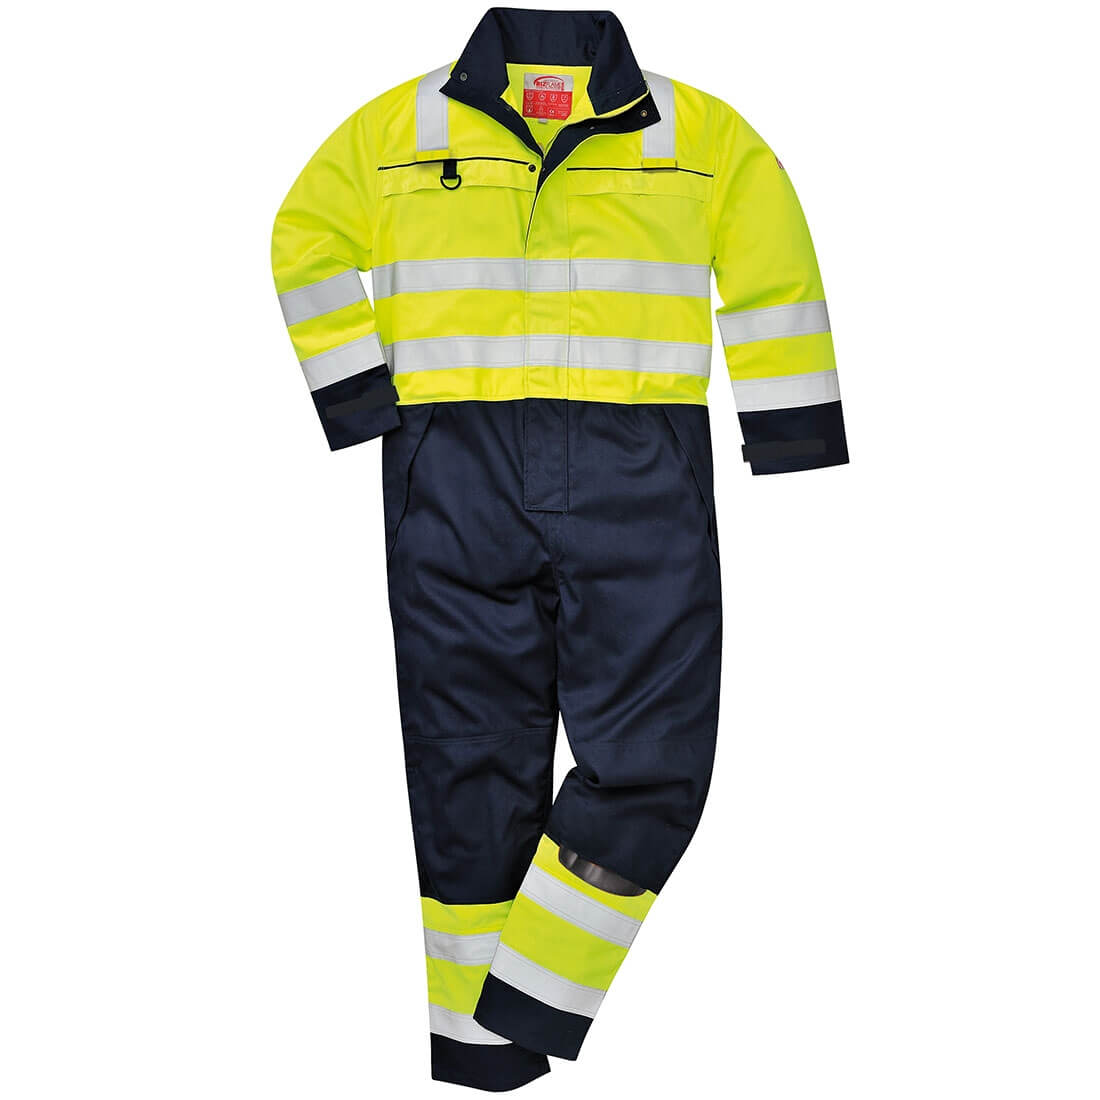 Multinorm-Warnschutz-Overall - Arbeitskleidung